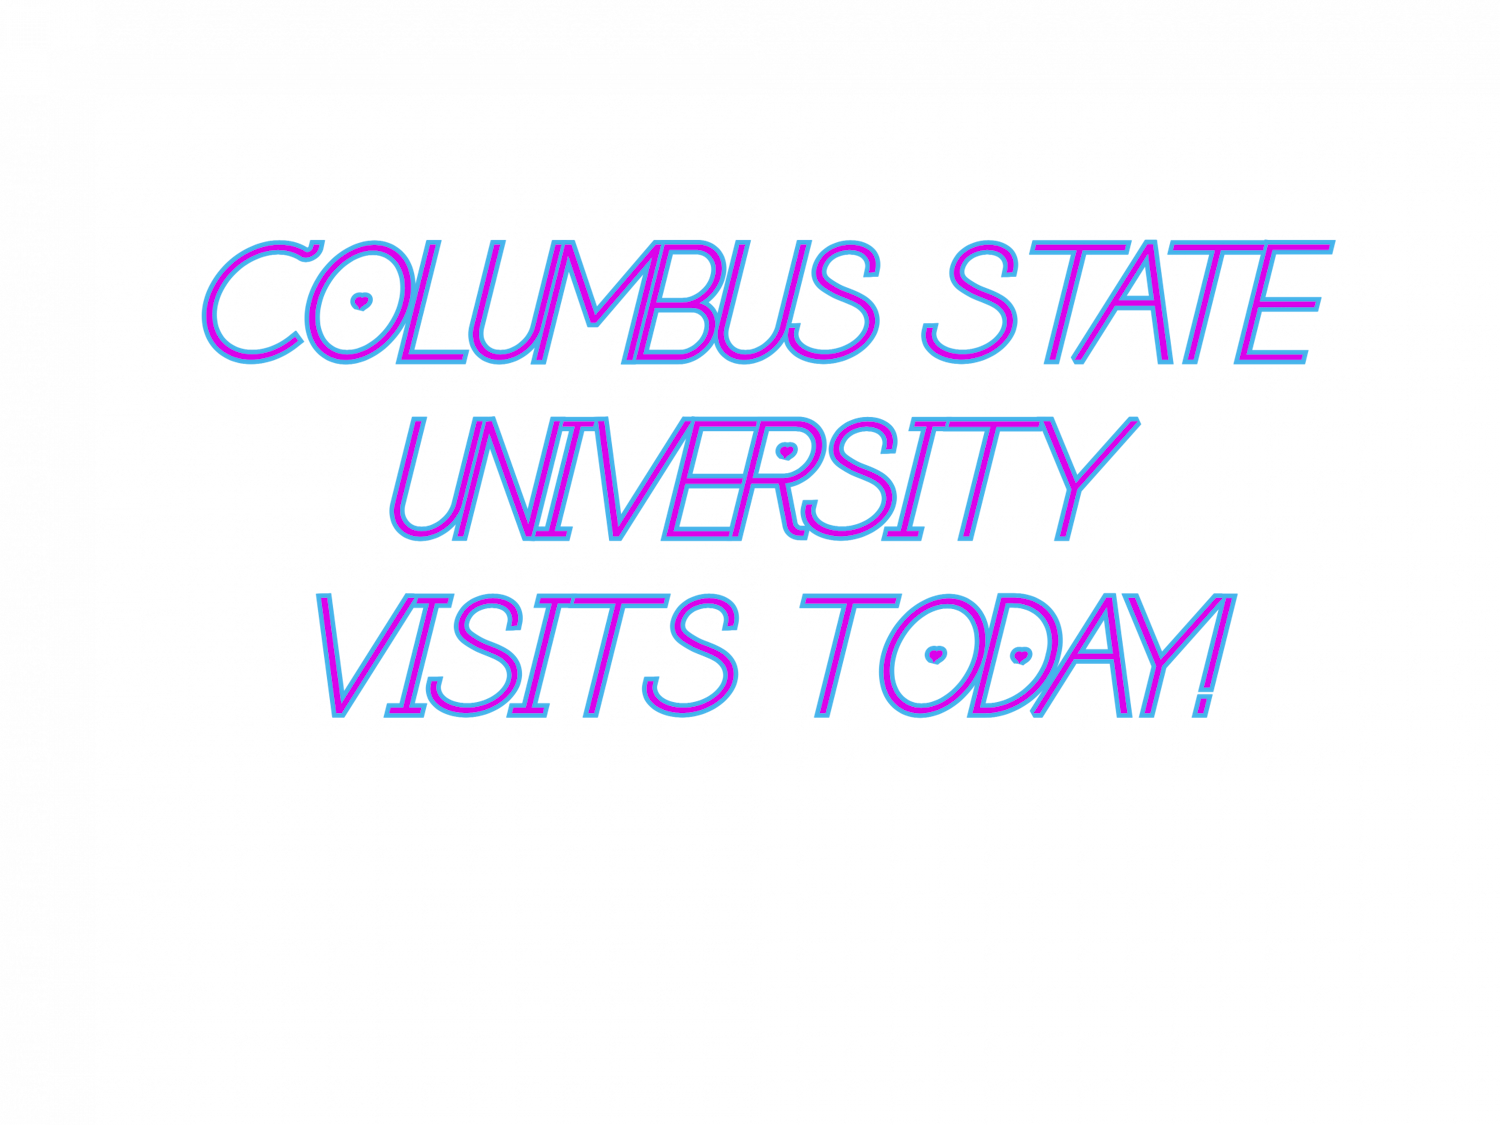 Columbus State Visits.png